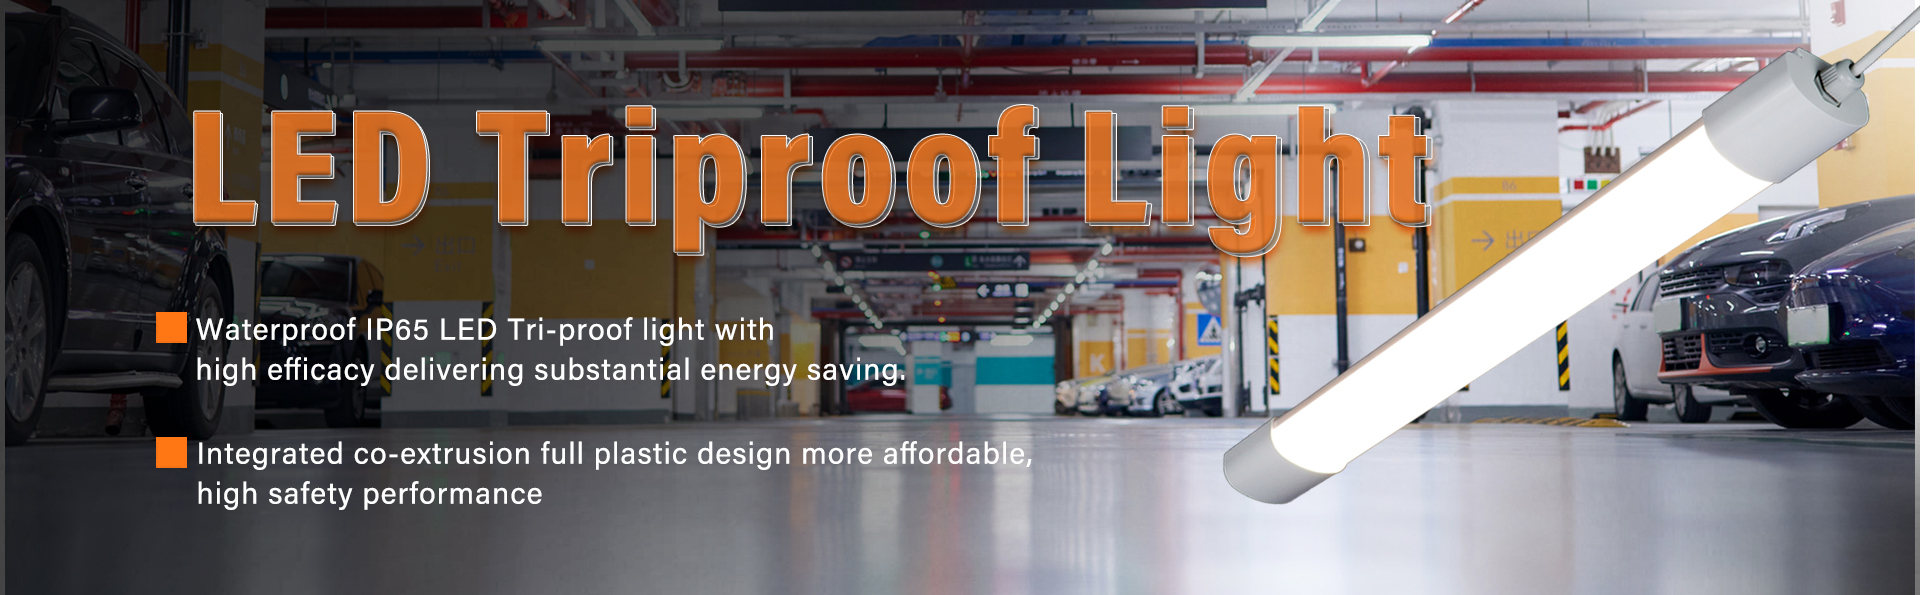 Waterproof IP65 LED Tri-proof Light